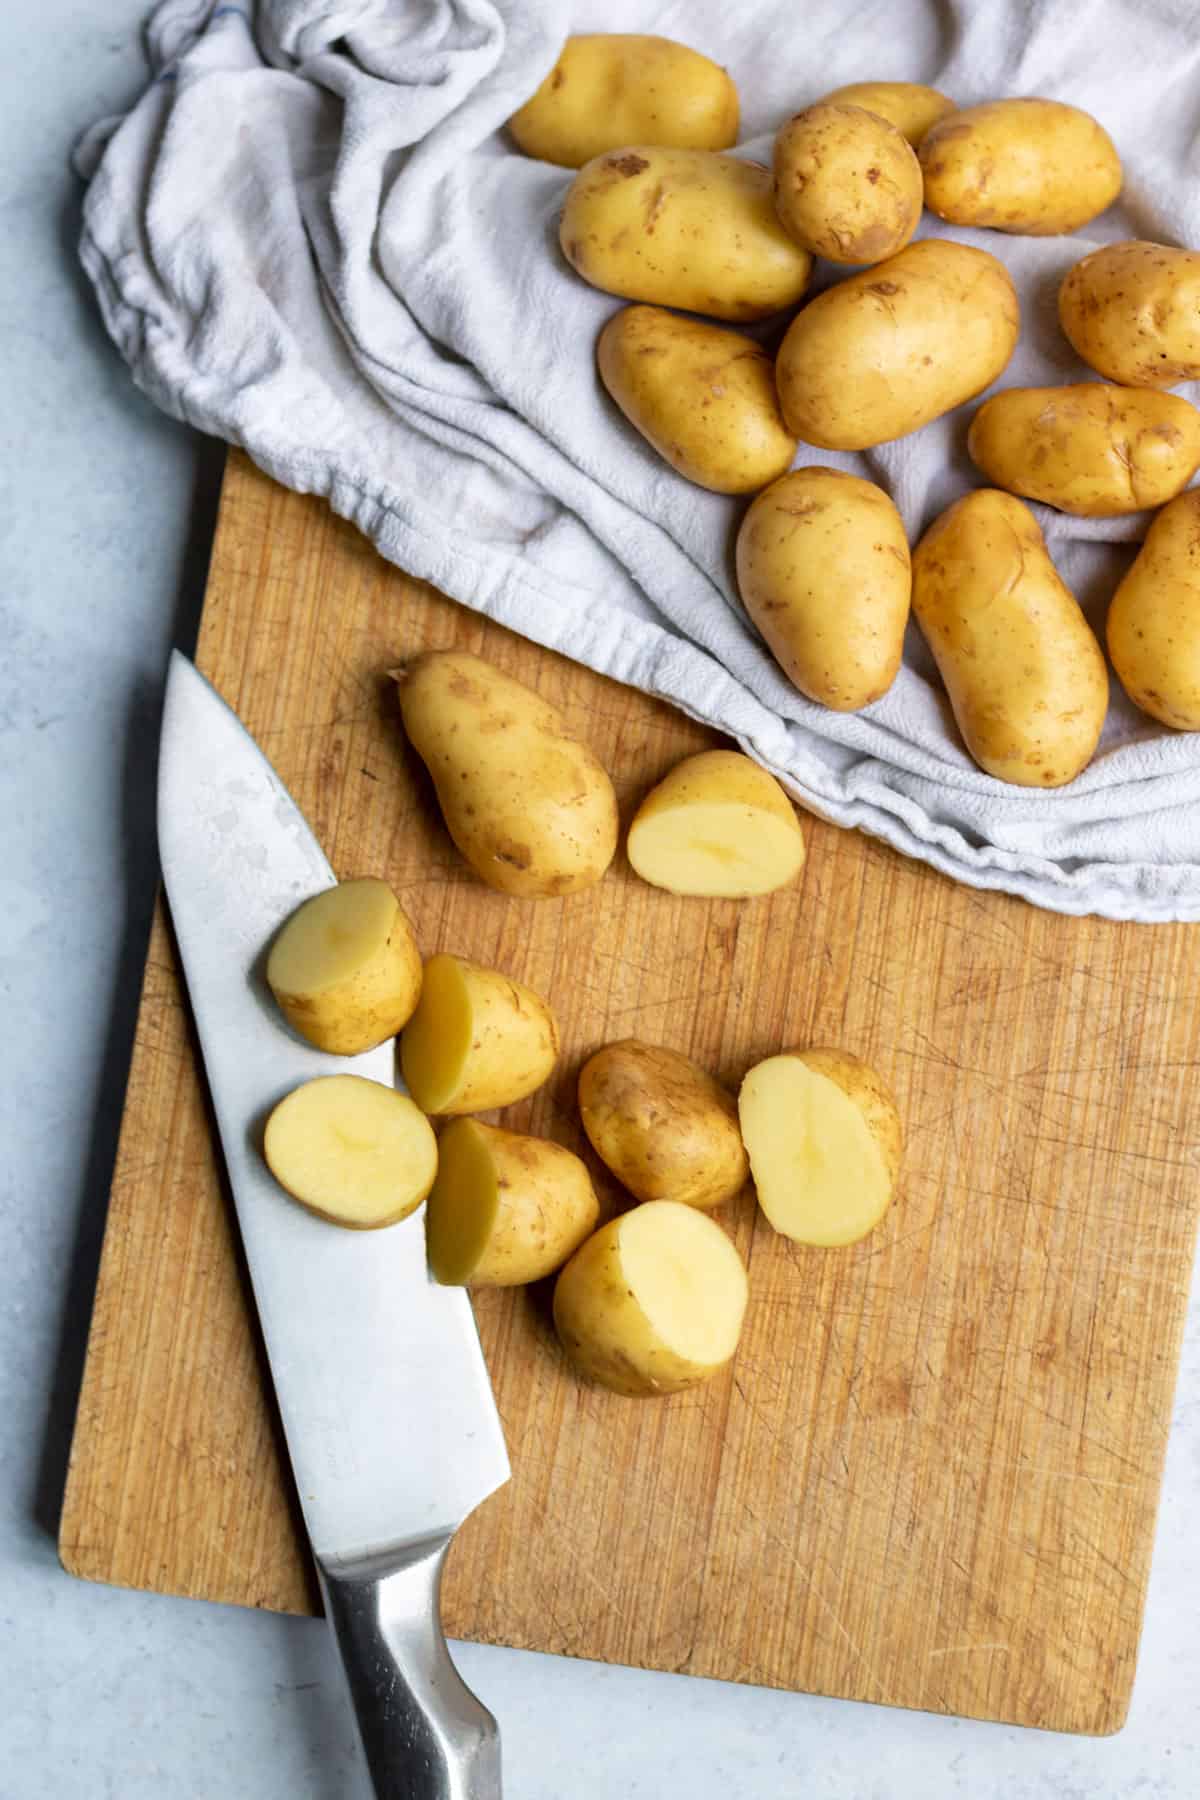 Cutting baby potatoes in half on a cutting board.